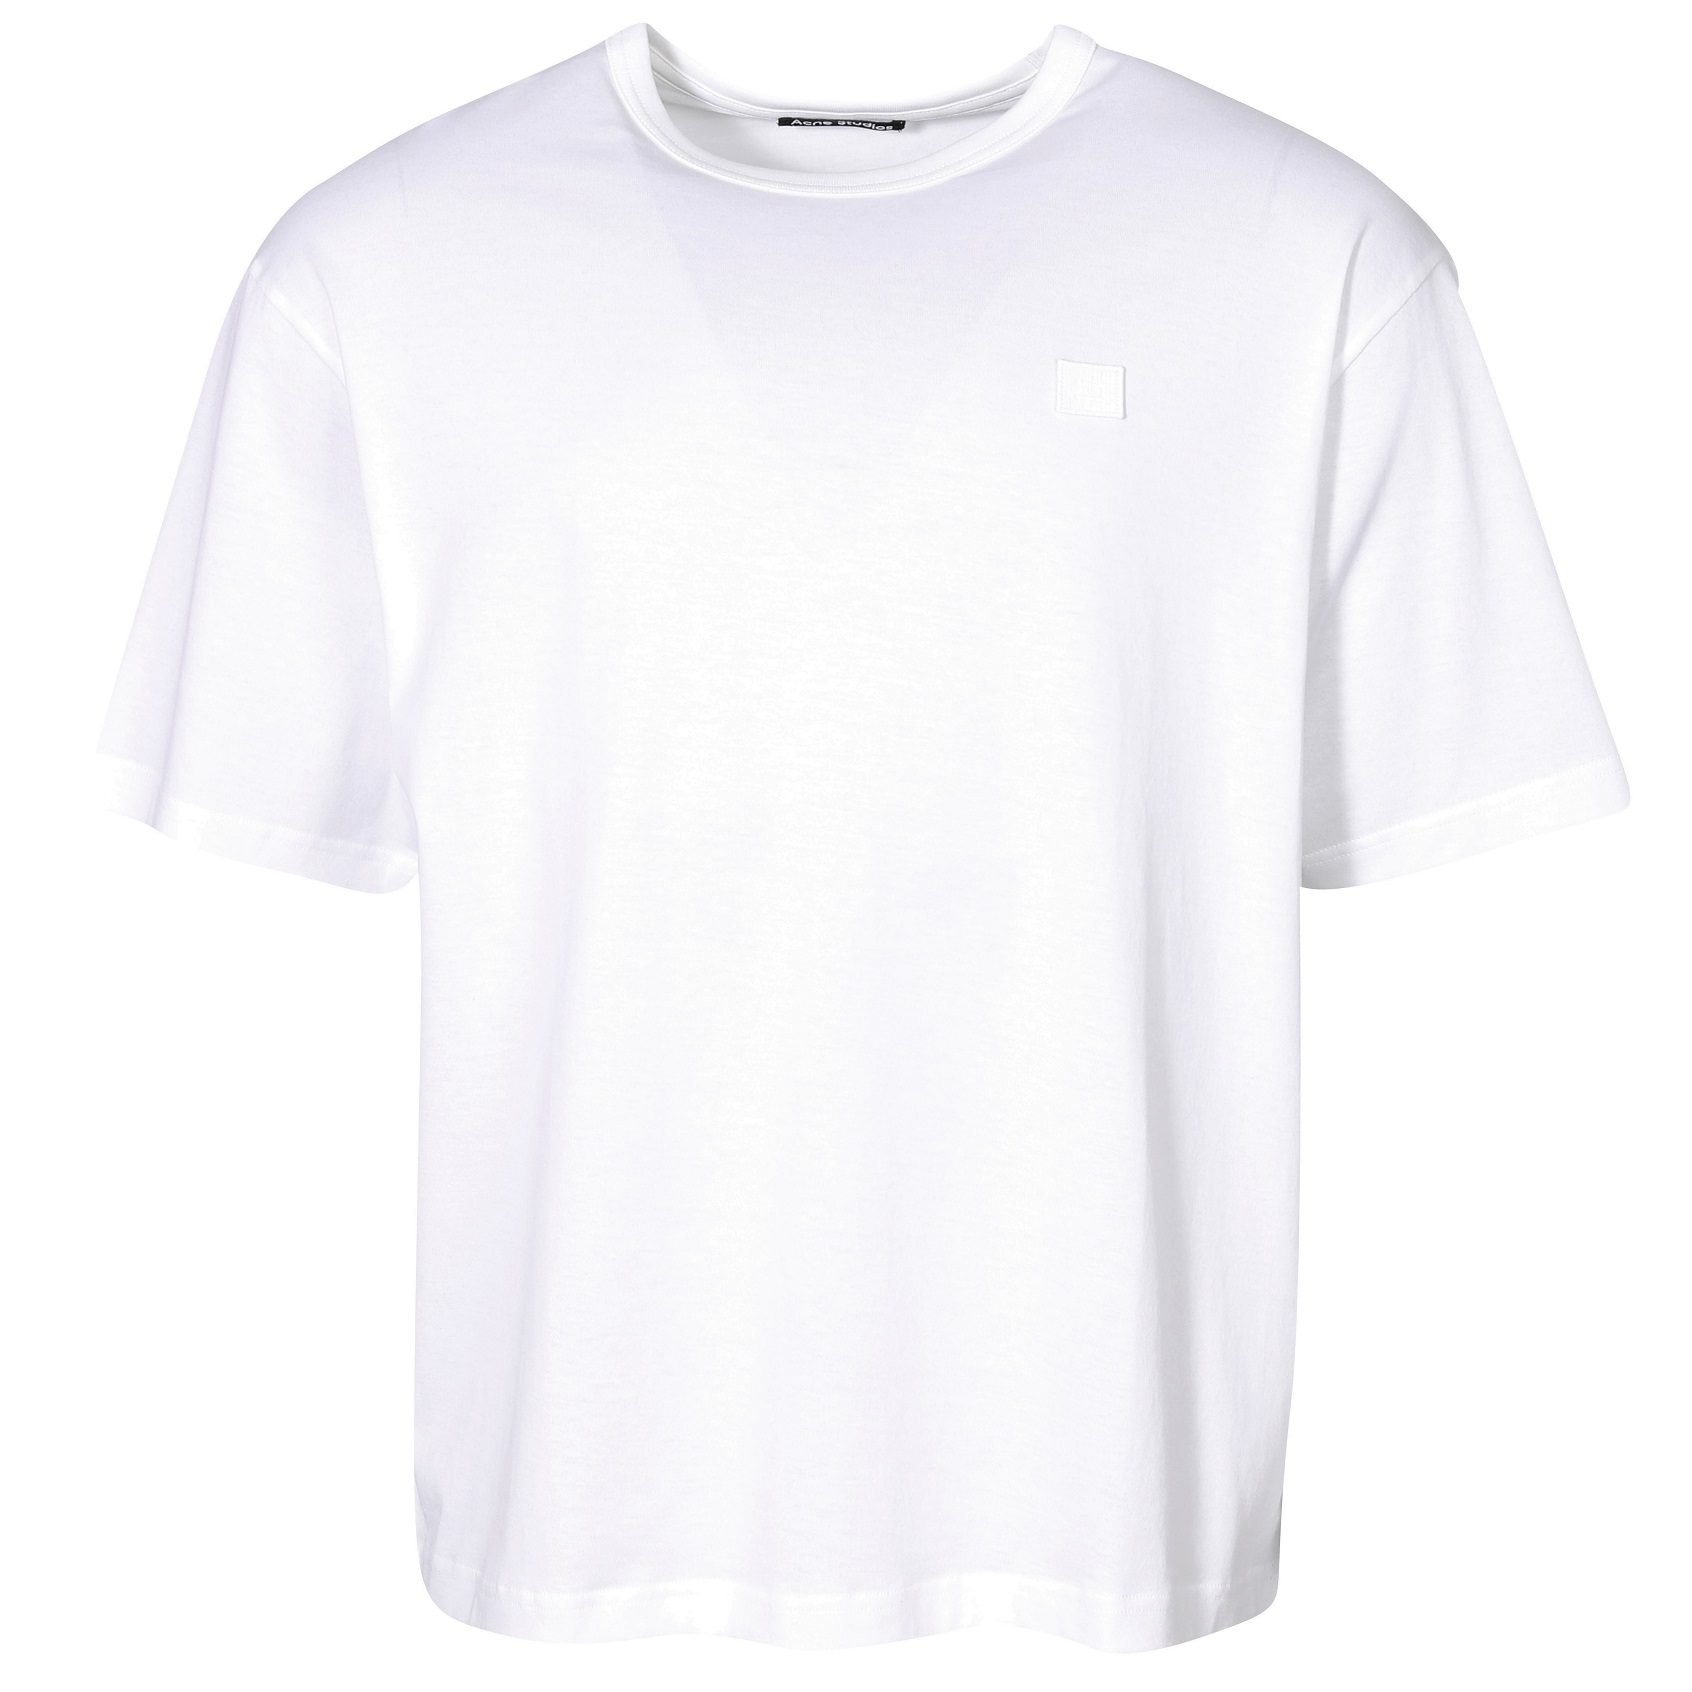 ACNE STUDIOS Unisex Oversize Face T-Shirt in Optic White